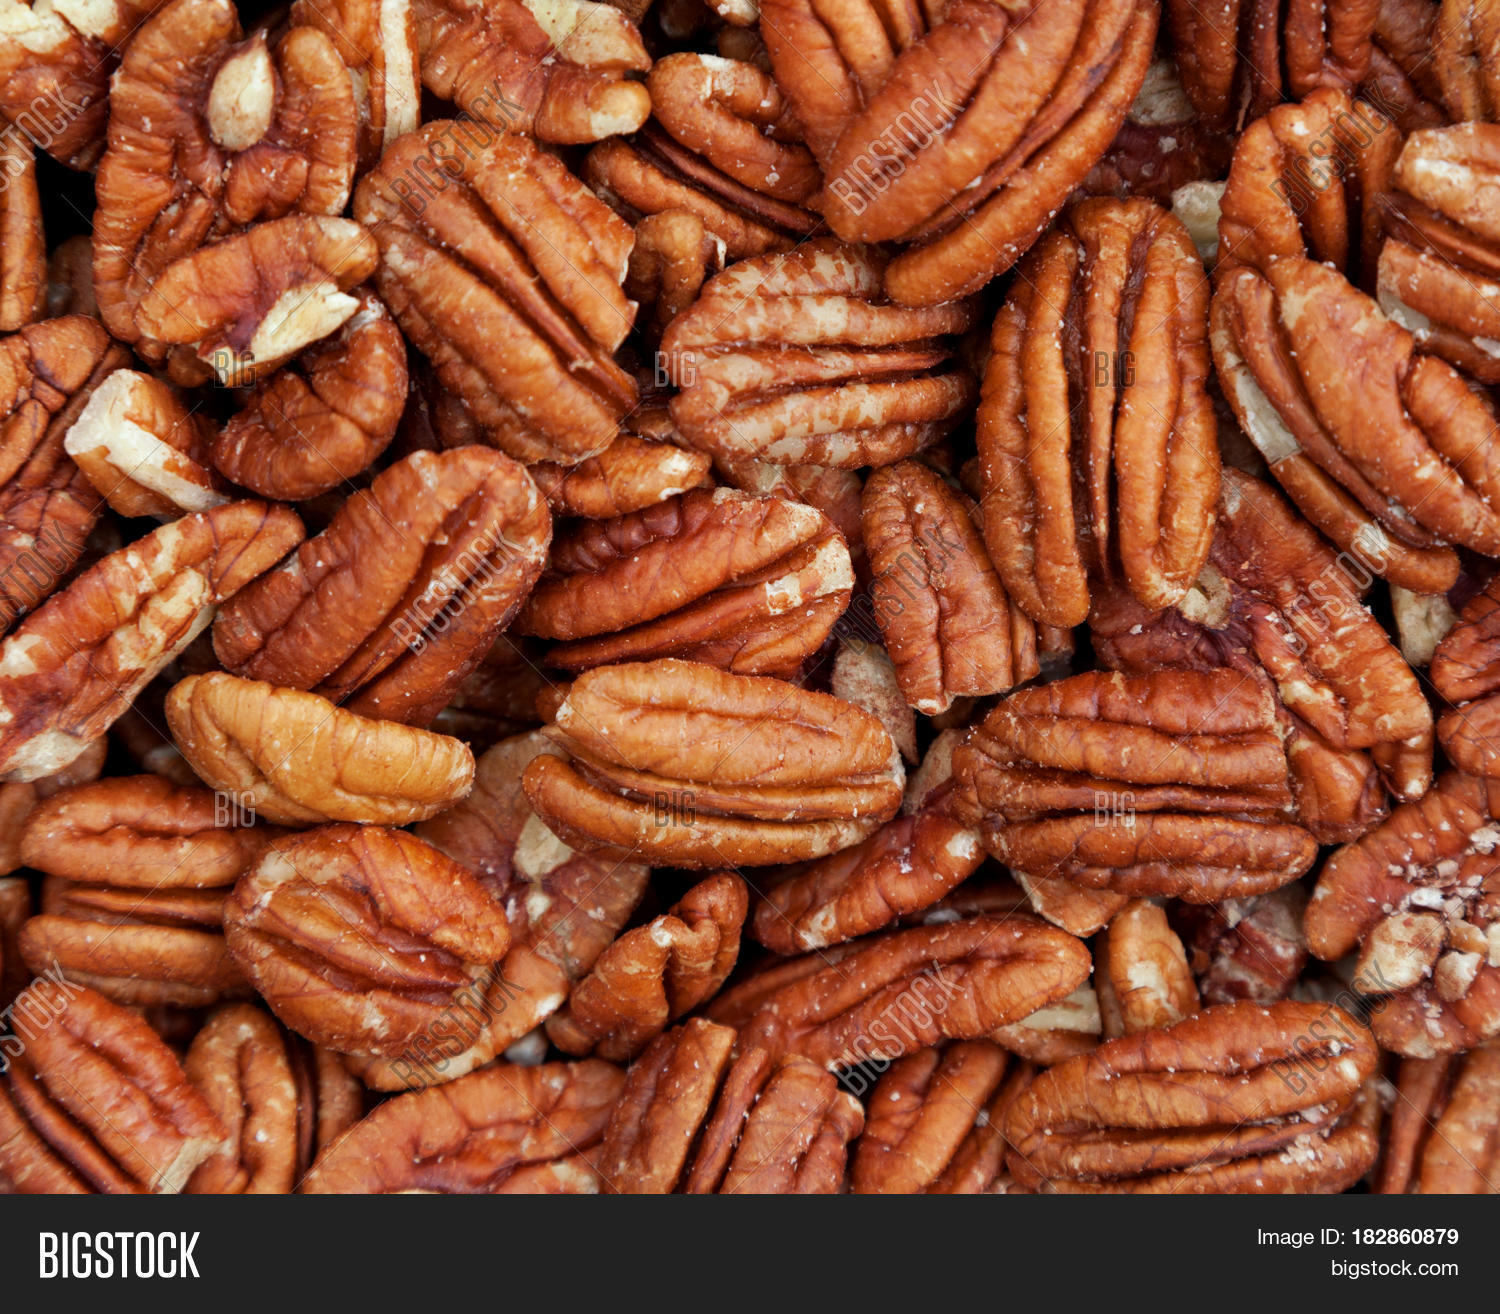 Background Texture Pecan Nuts Image & Photo | Bigstock